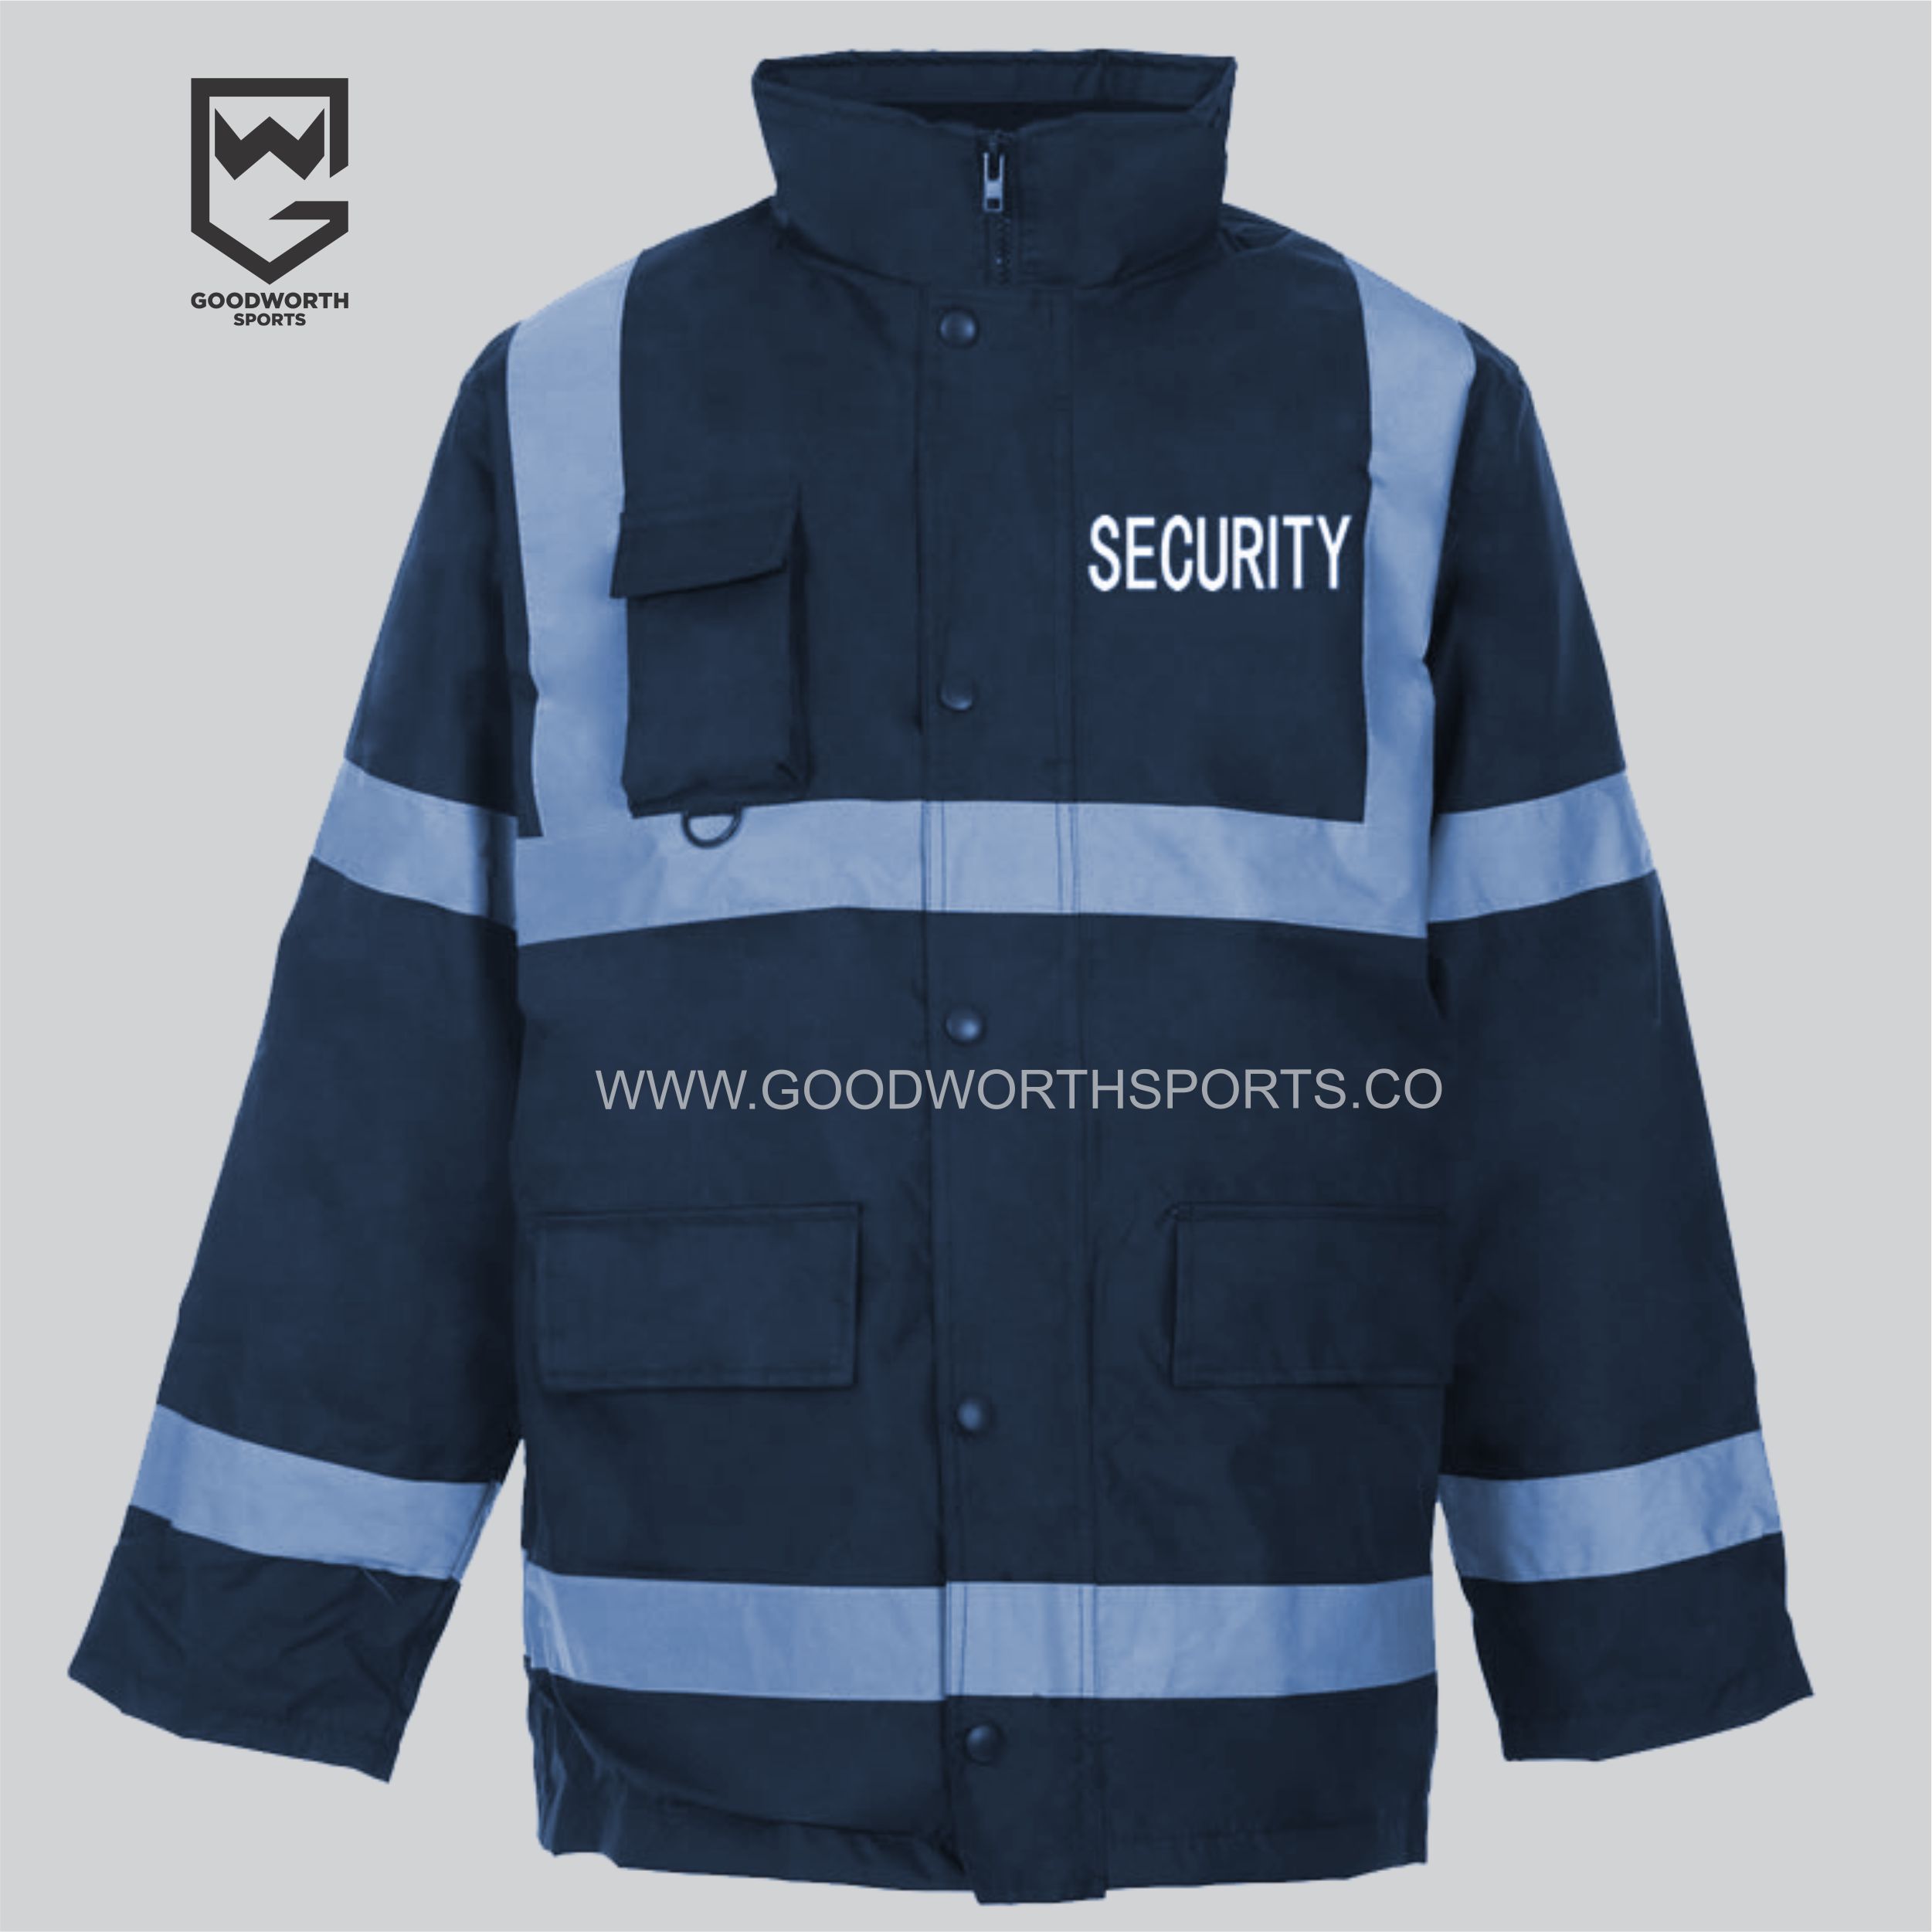 Security Guard Jackets & Uniforms Manufacturers